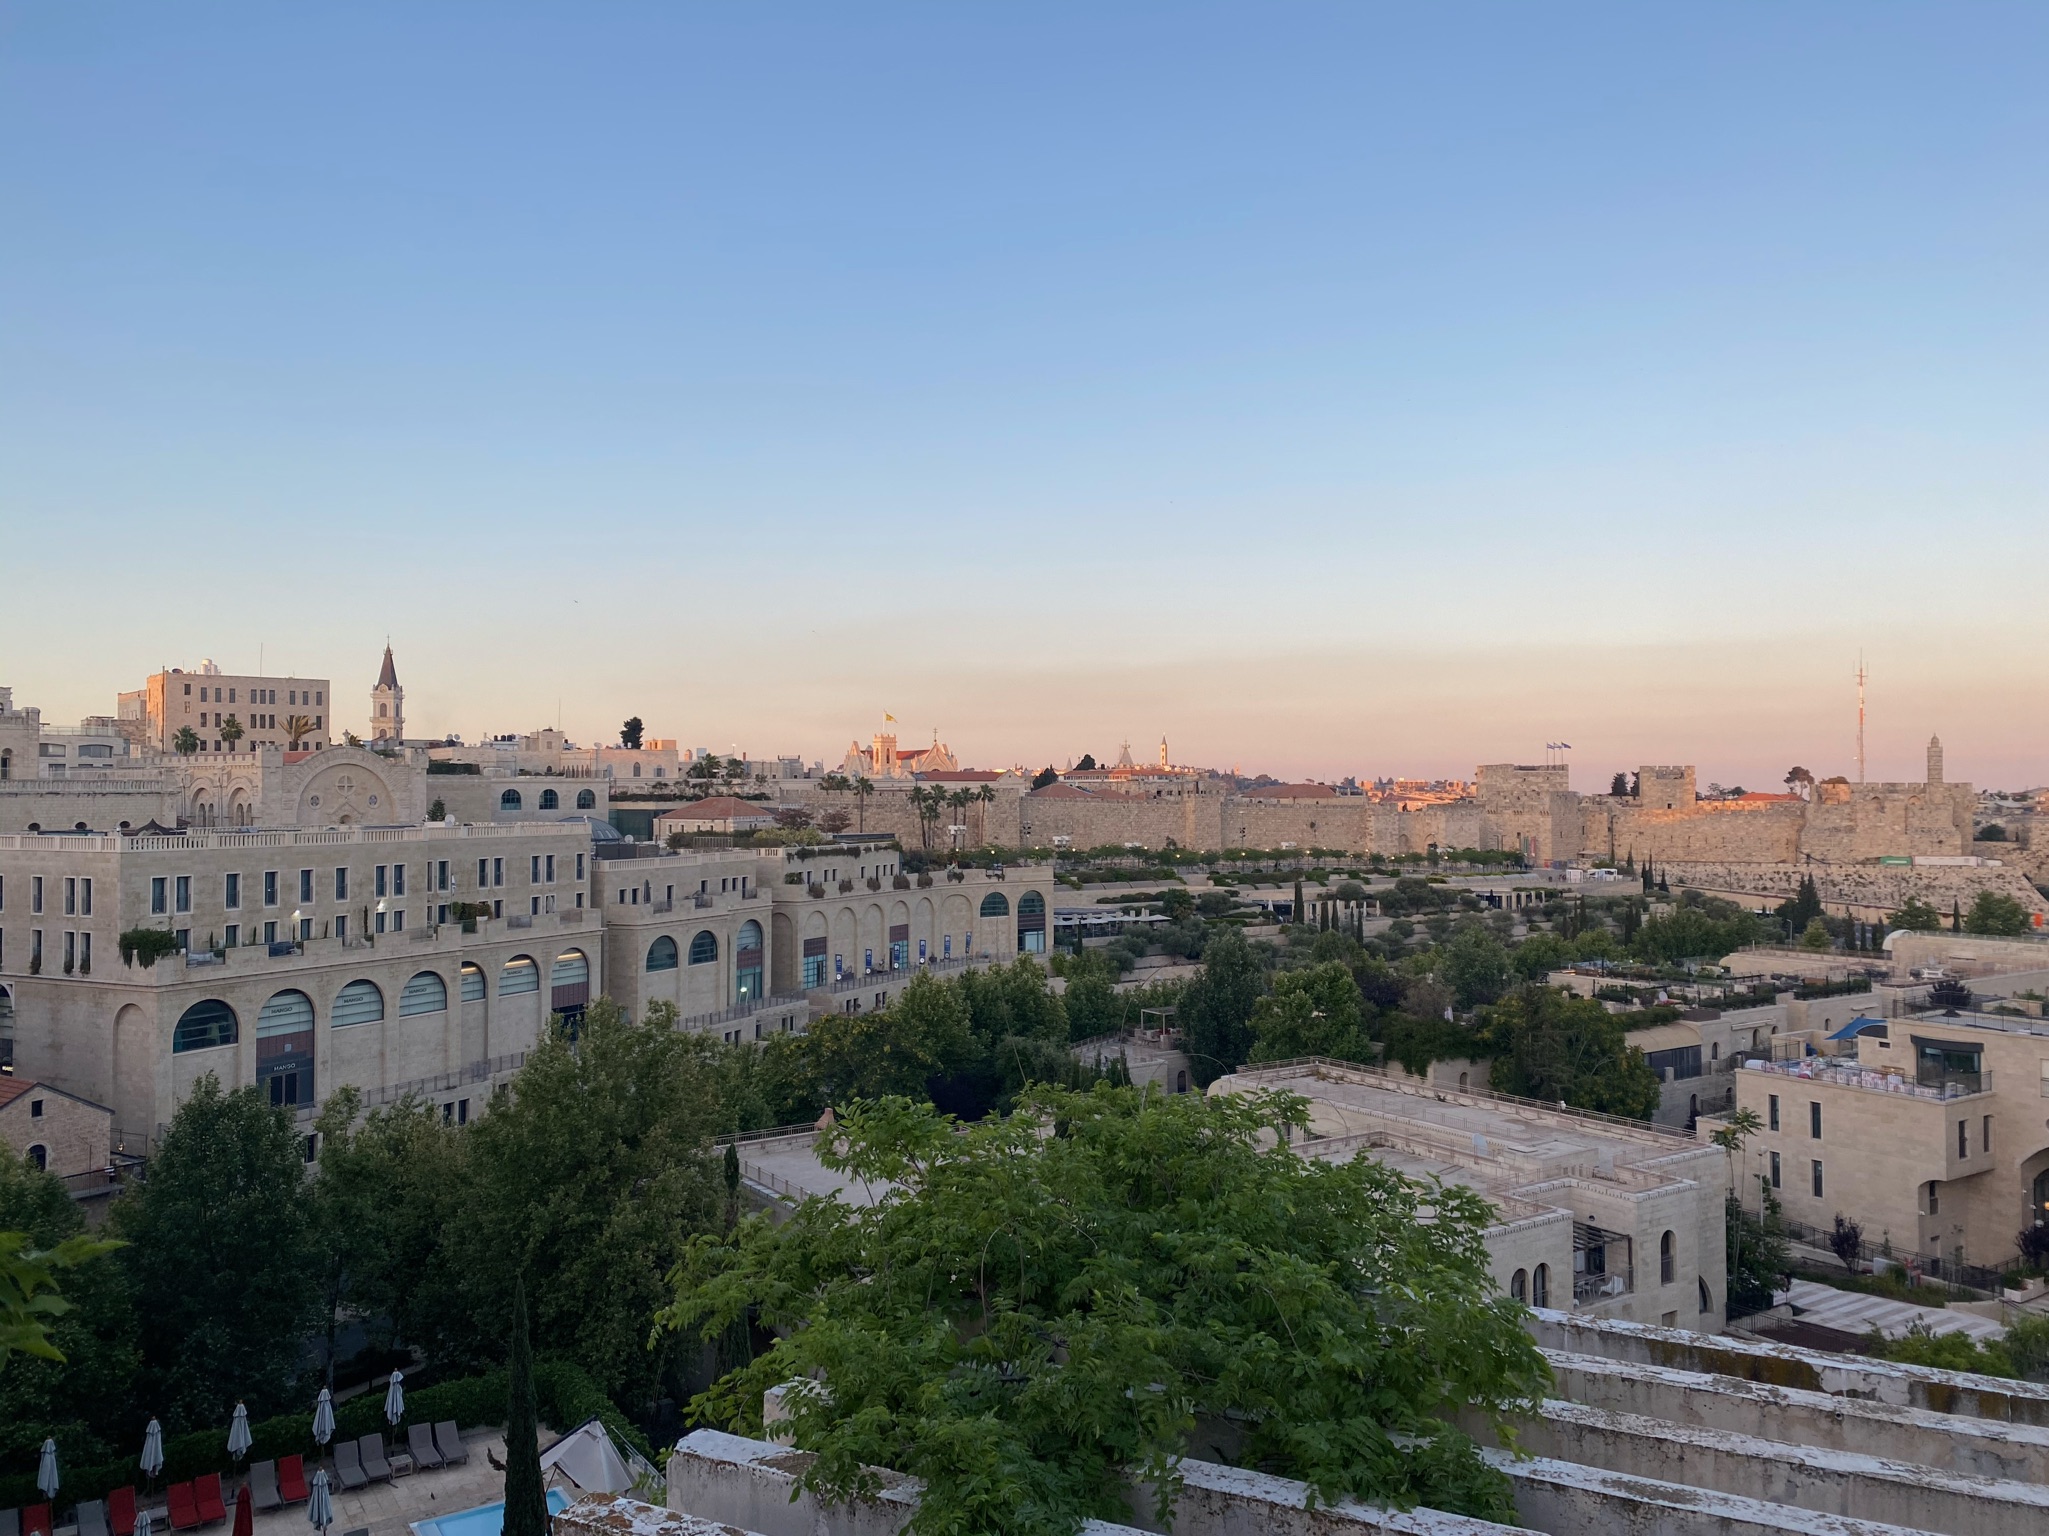 A quiet Shabbat in Jerusalem